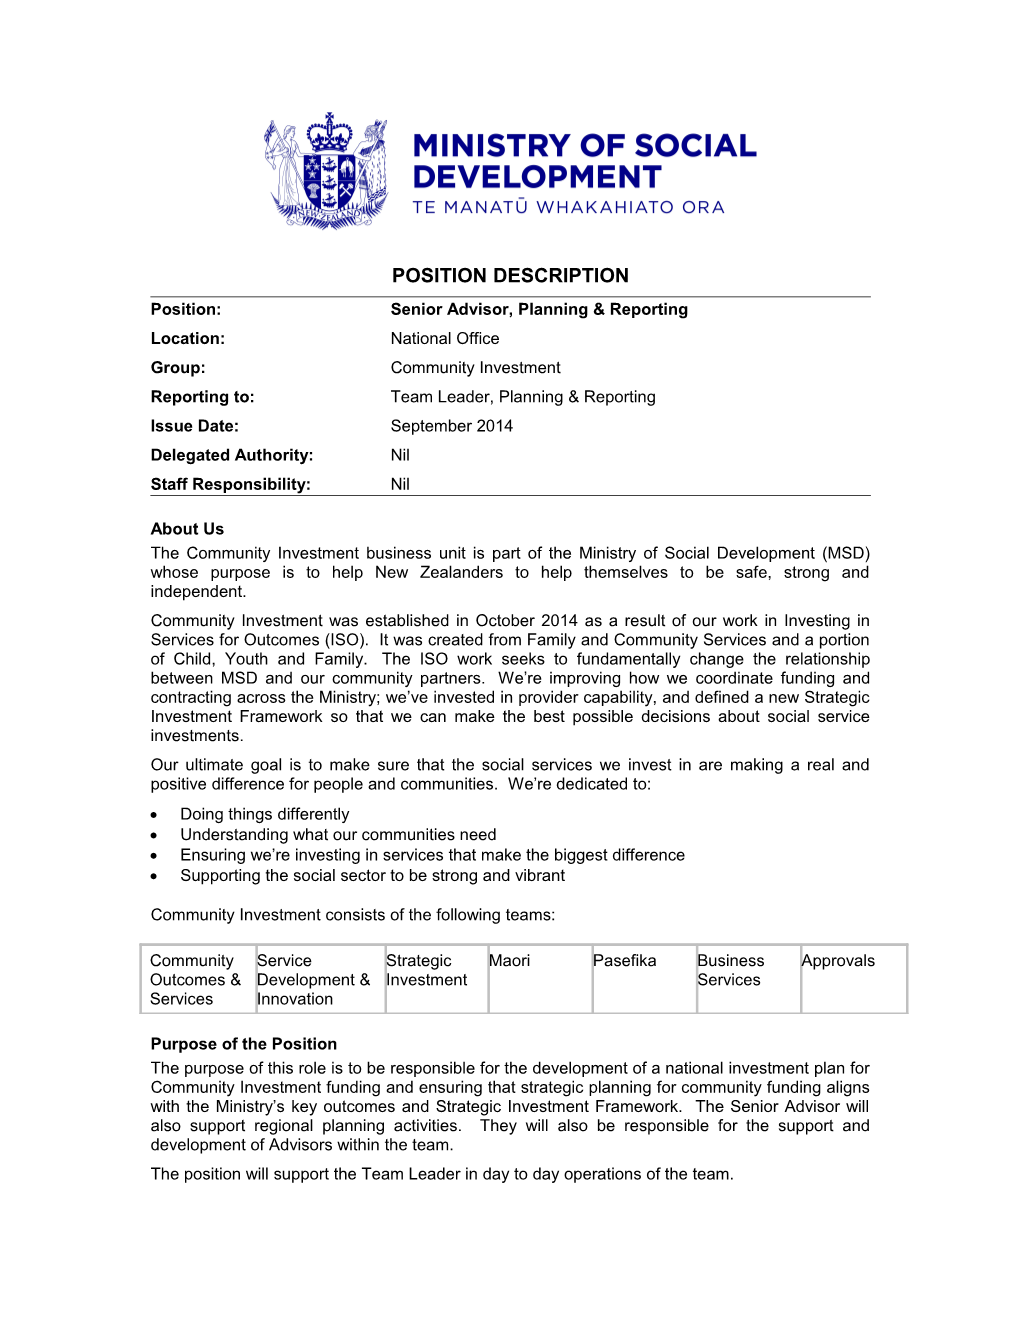 Position:Senior Advisor,Planning & Reporting